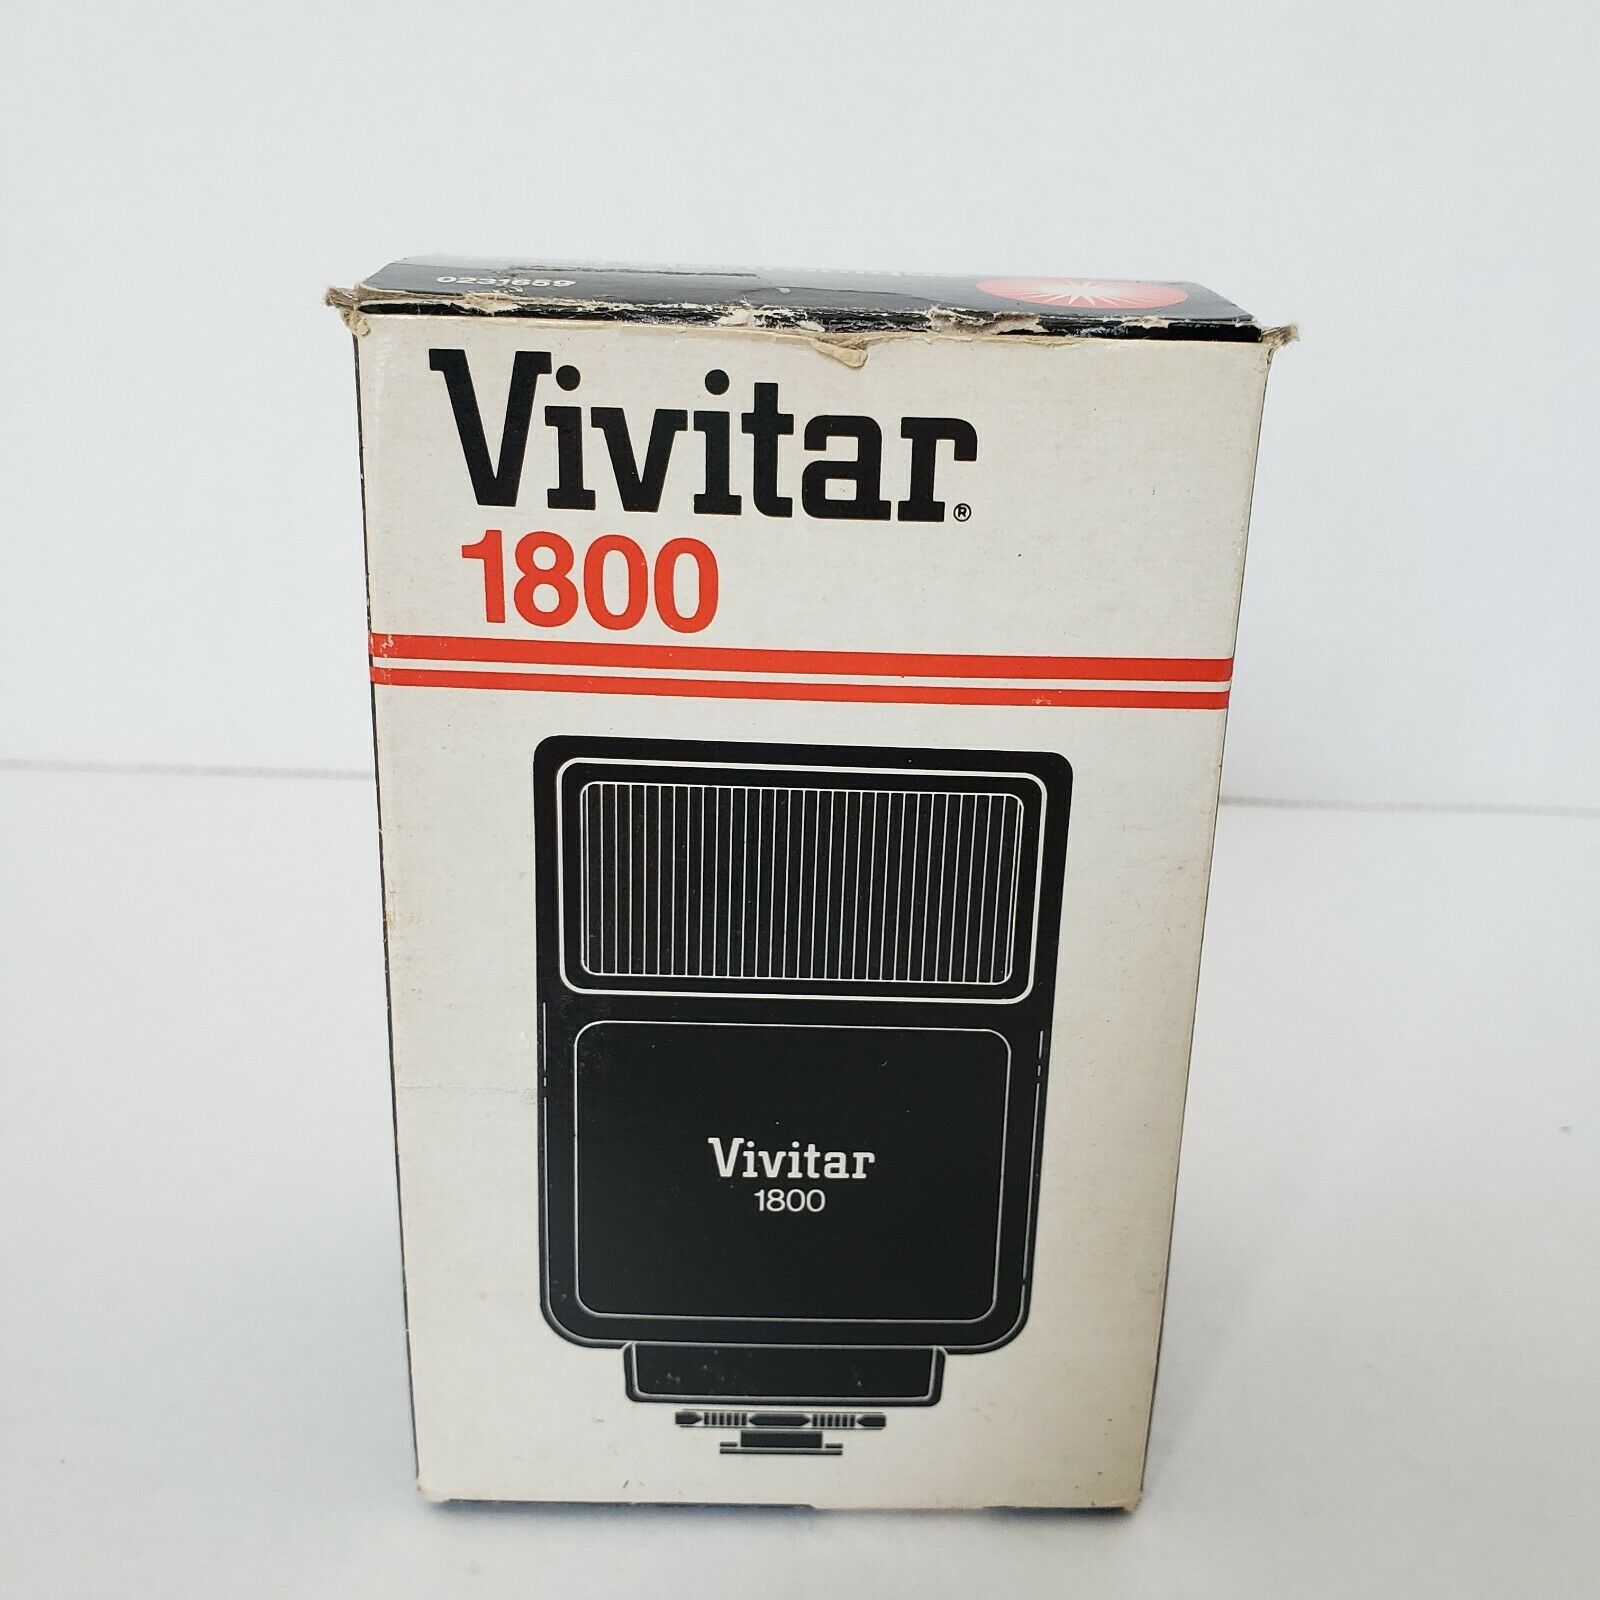 Vivitar 1800 Electronic Flash original box